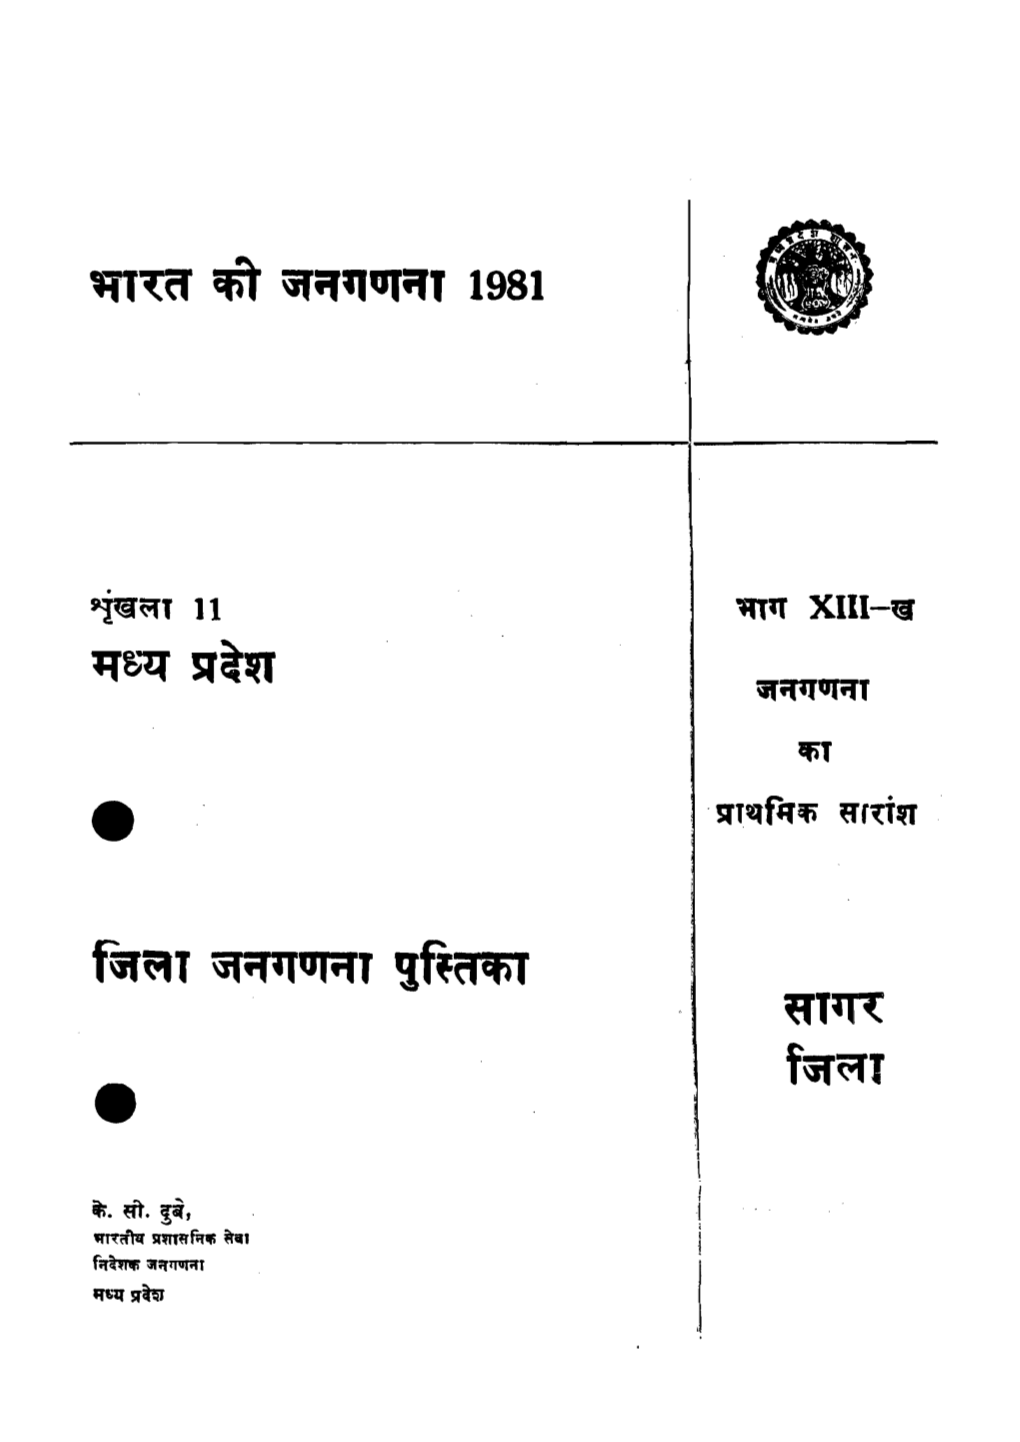 District Census Handbook, Sagar, Part XIII-B, Series-11